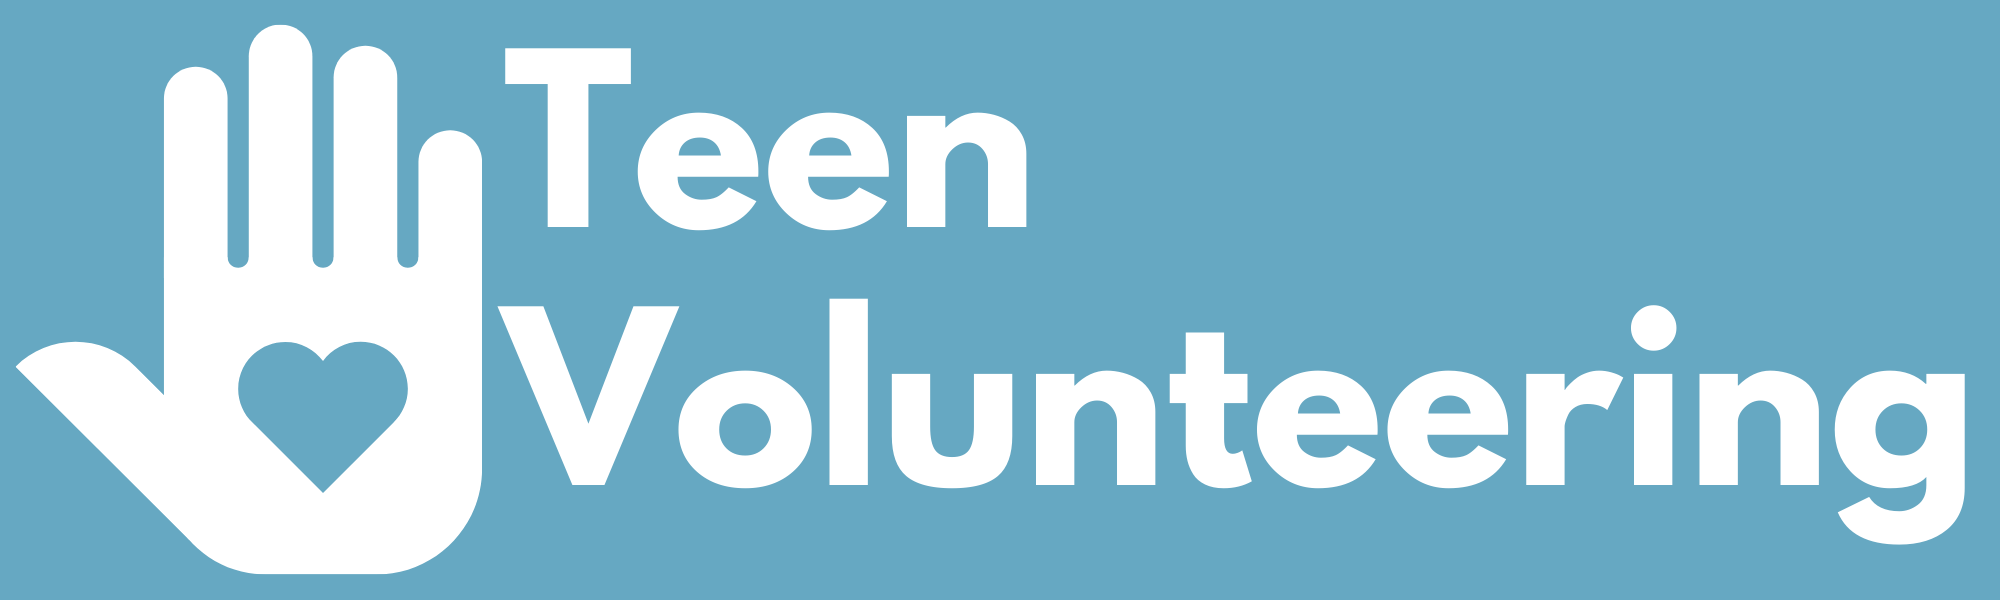 Link to information about the Teen Volunteer Program